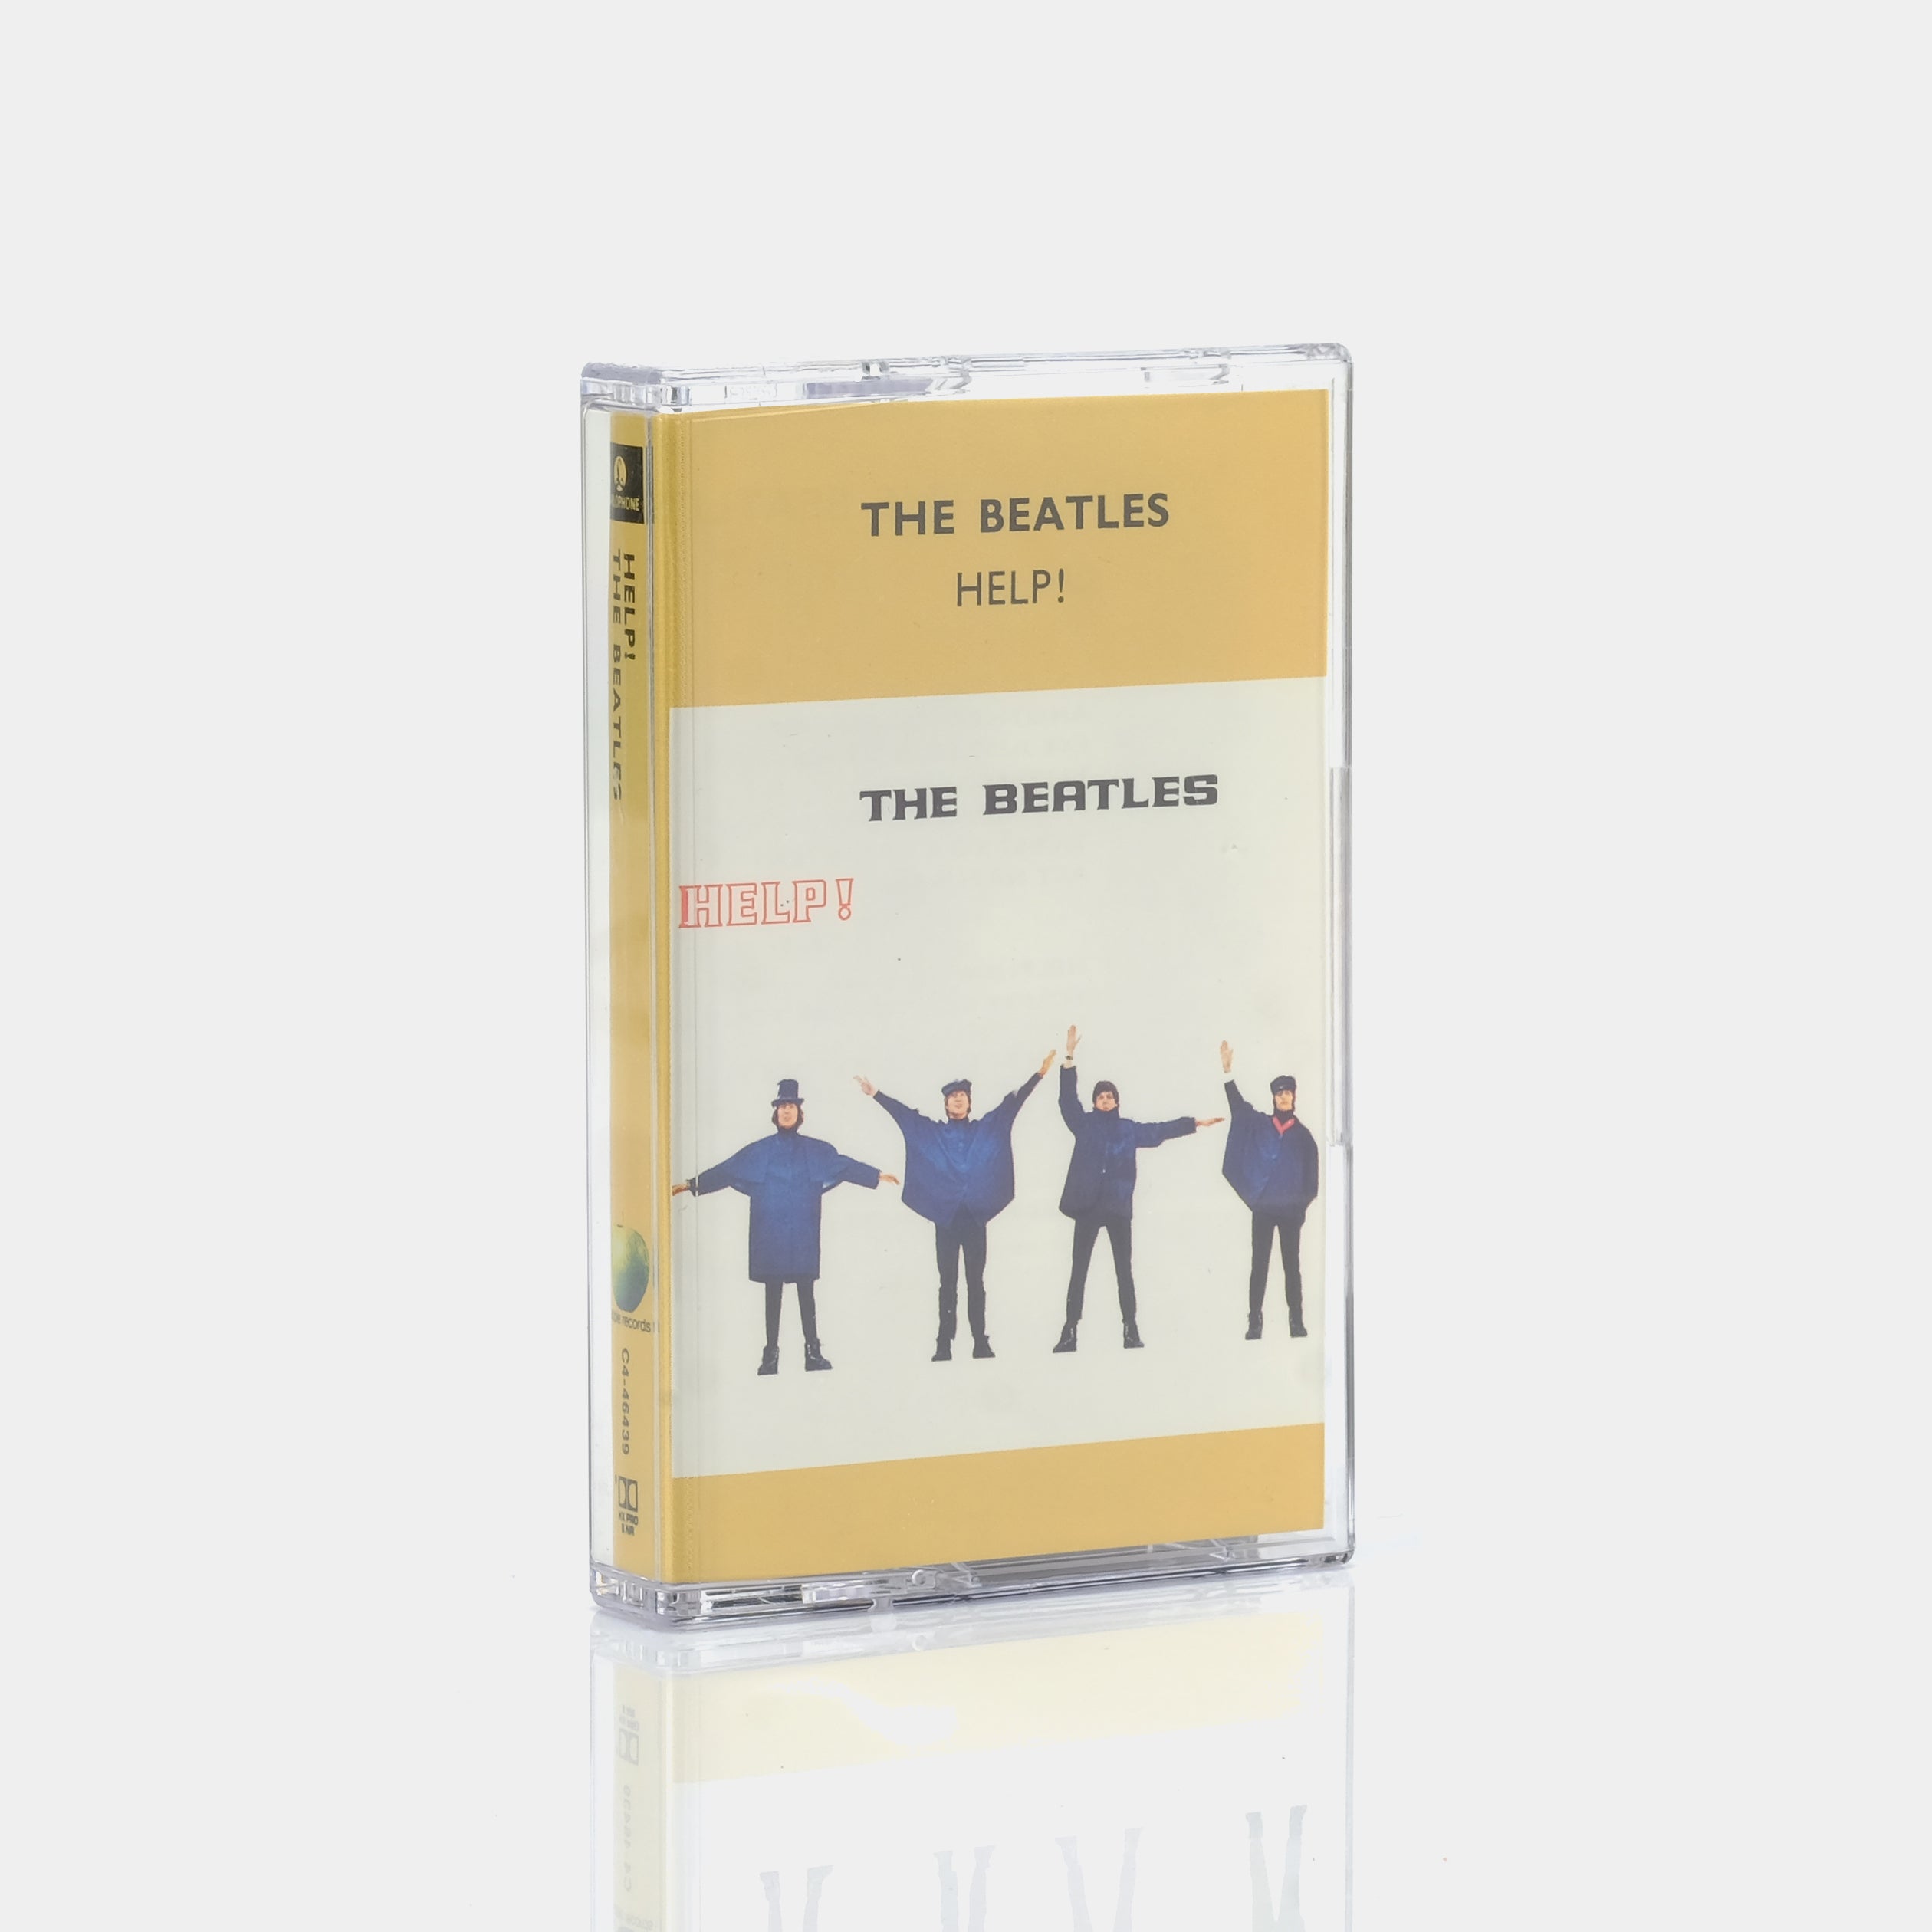 The Beatles - Help! Cassette Tape